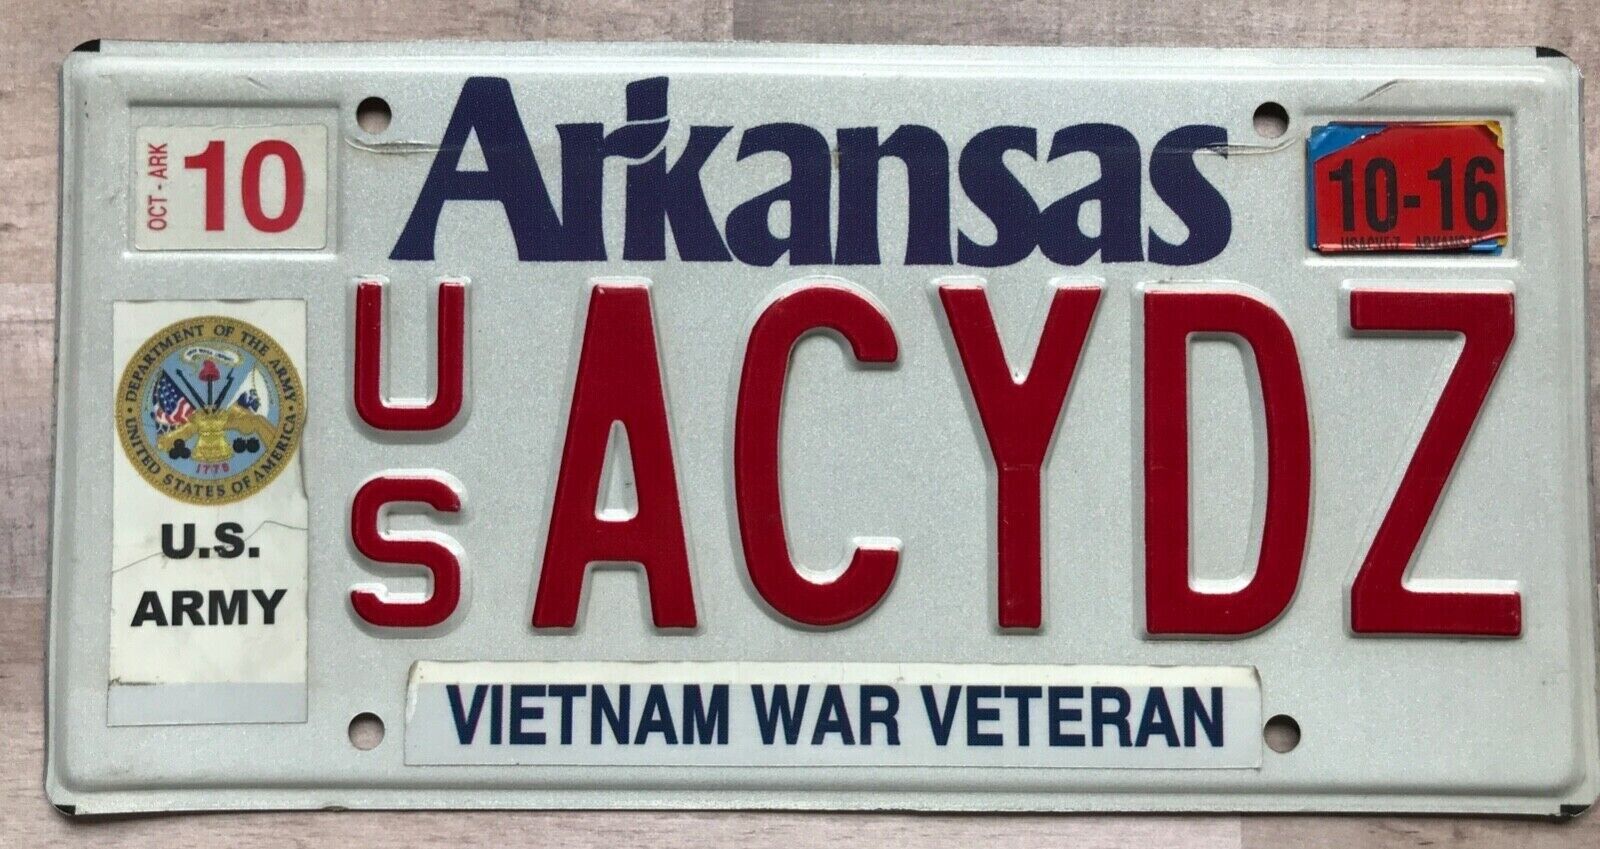 Arkansas 2016 Vietnam War Veteran US Army License Plate ACYDZ